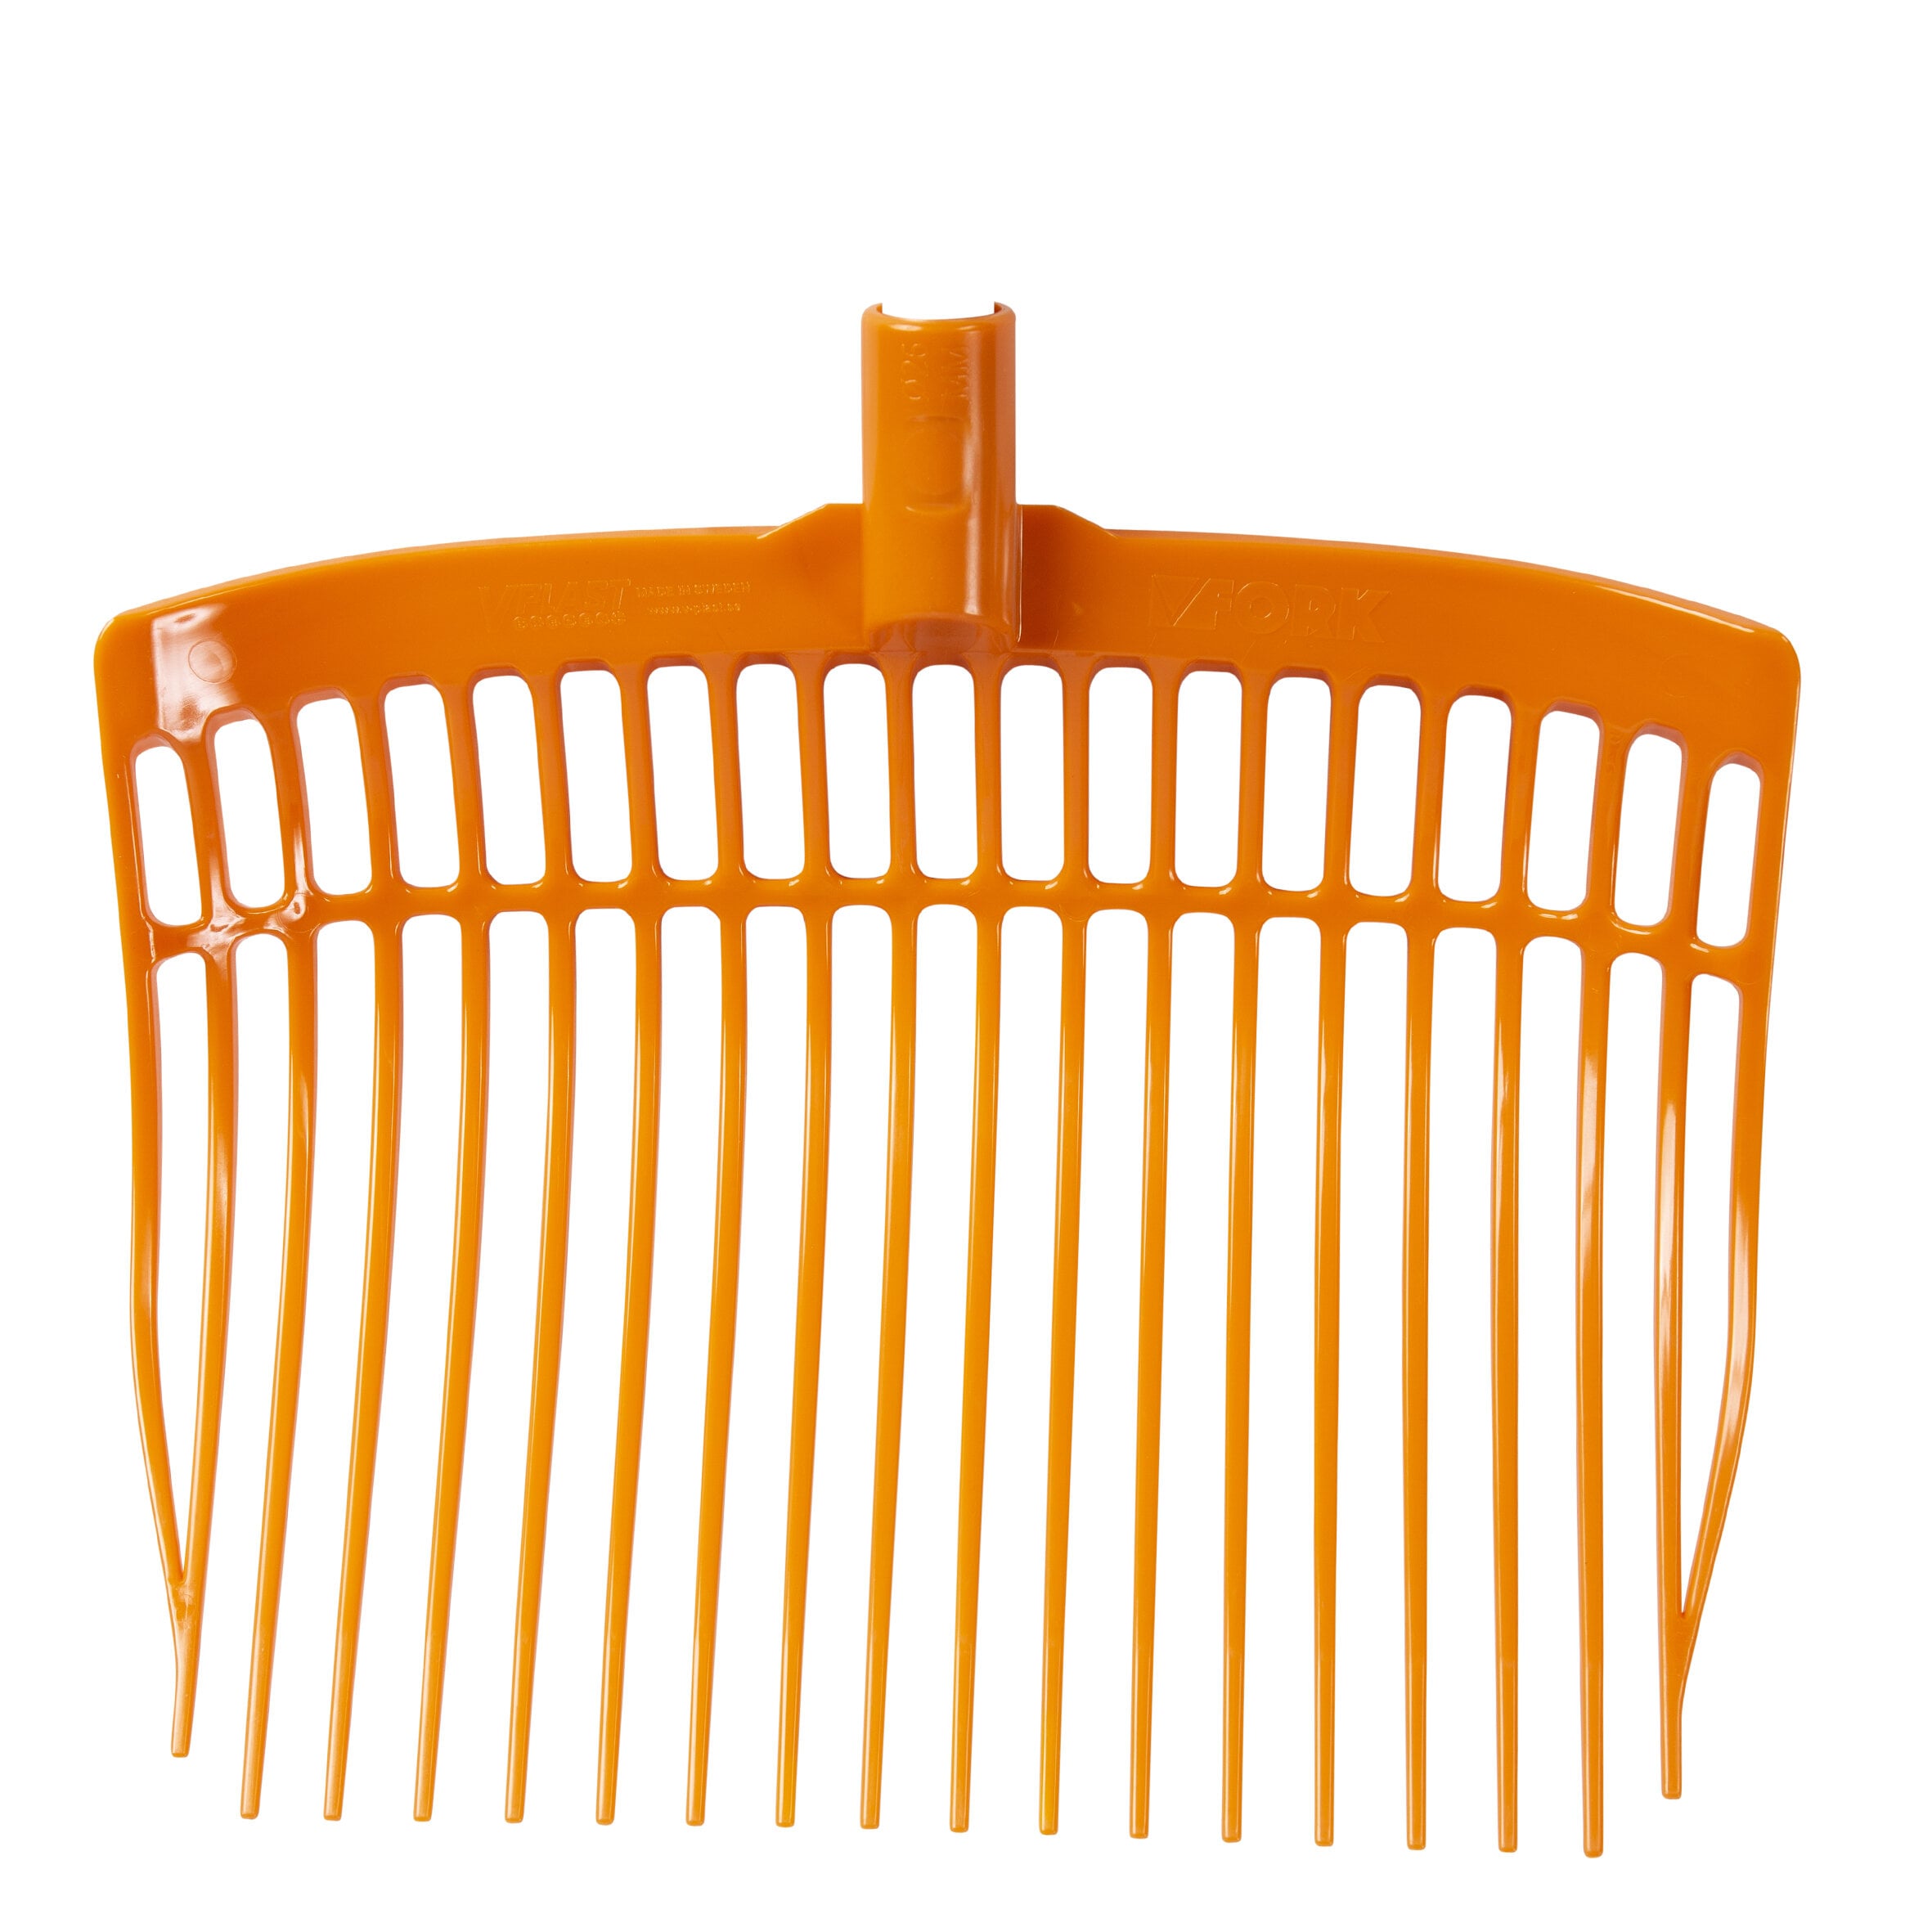 Fork head - orange